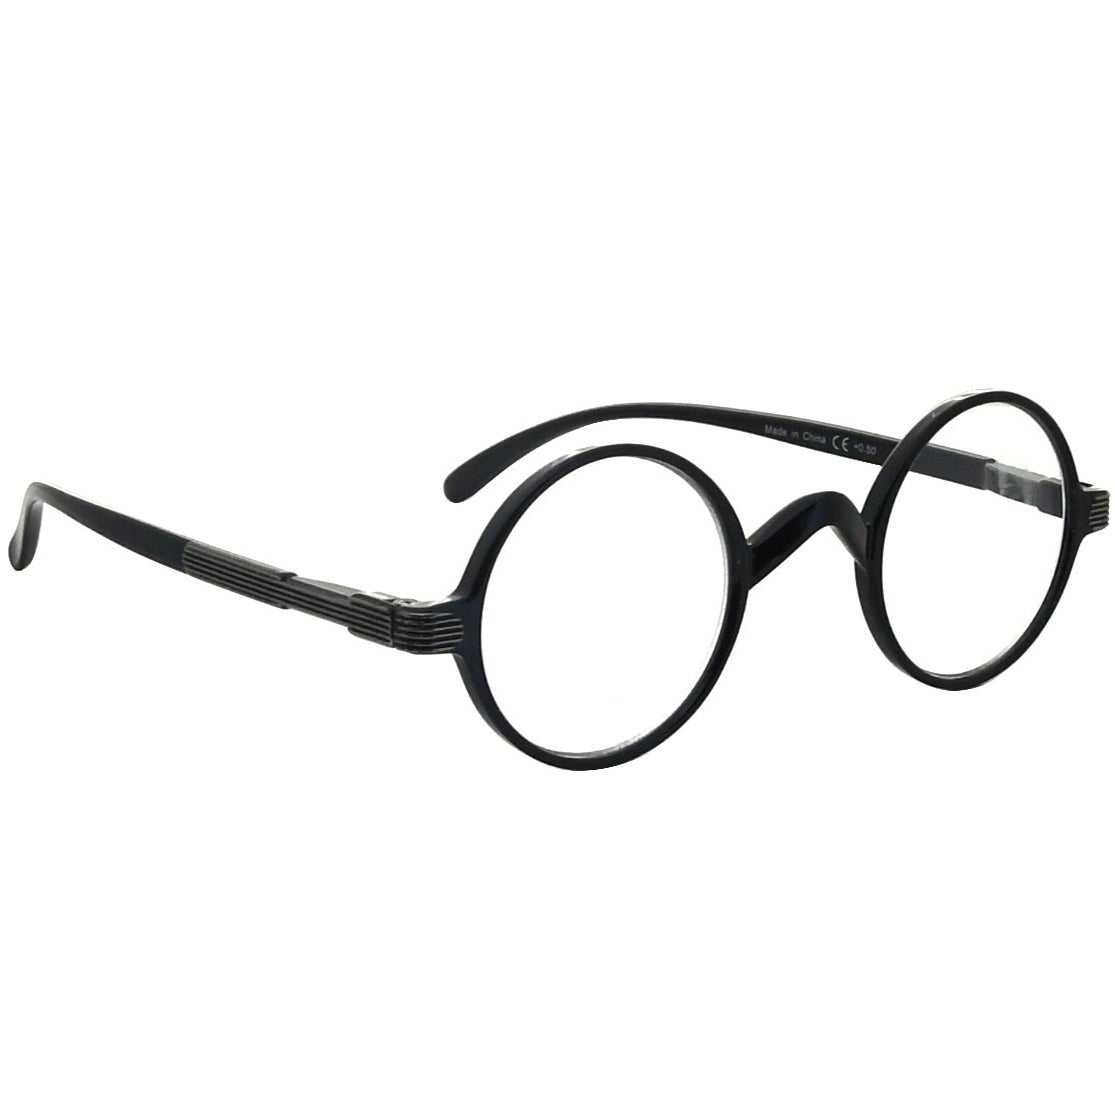 Vintage Round Reading Glasses Professor Readers 5-R077B